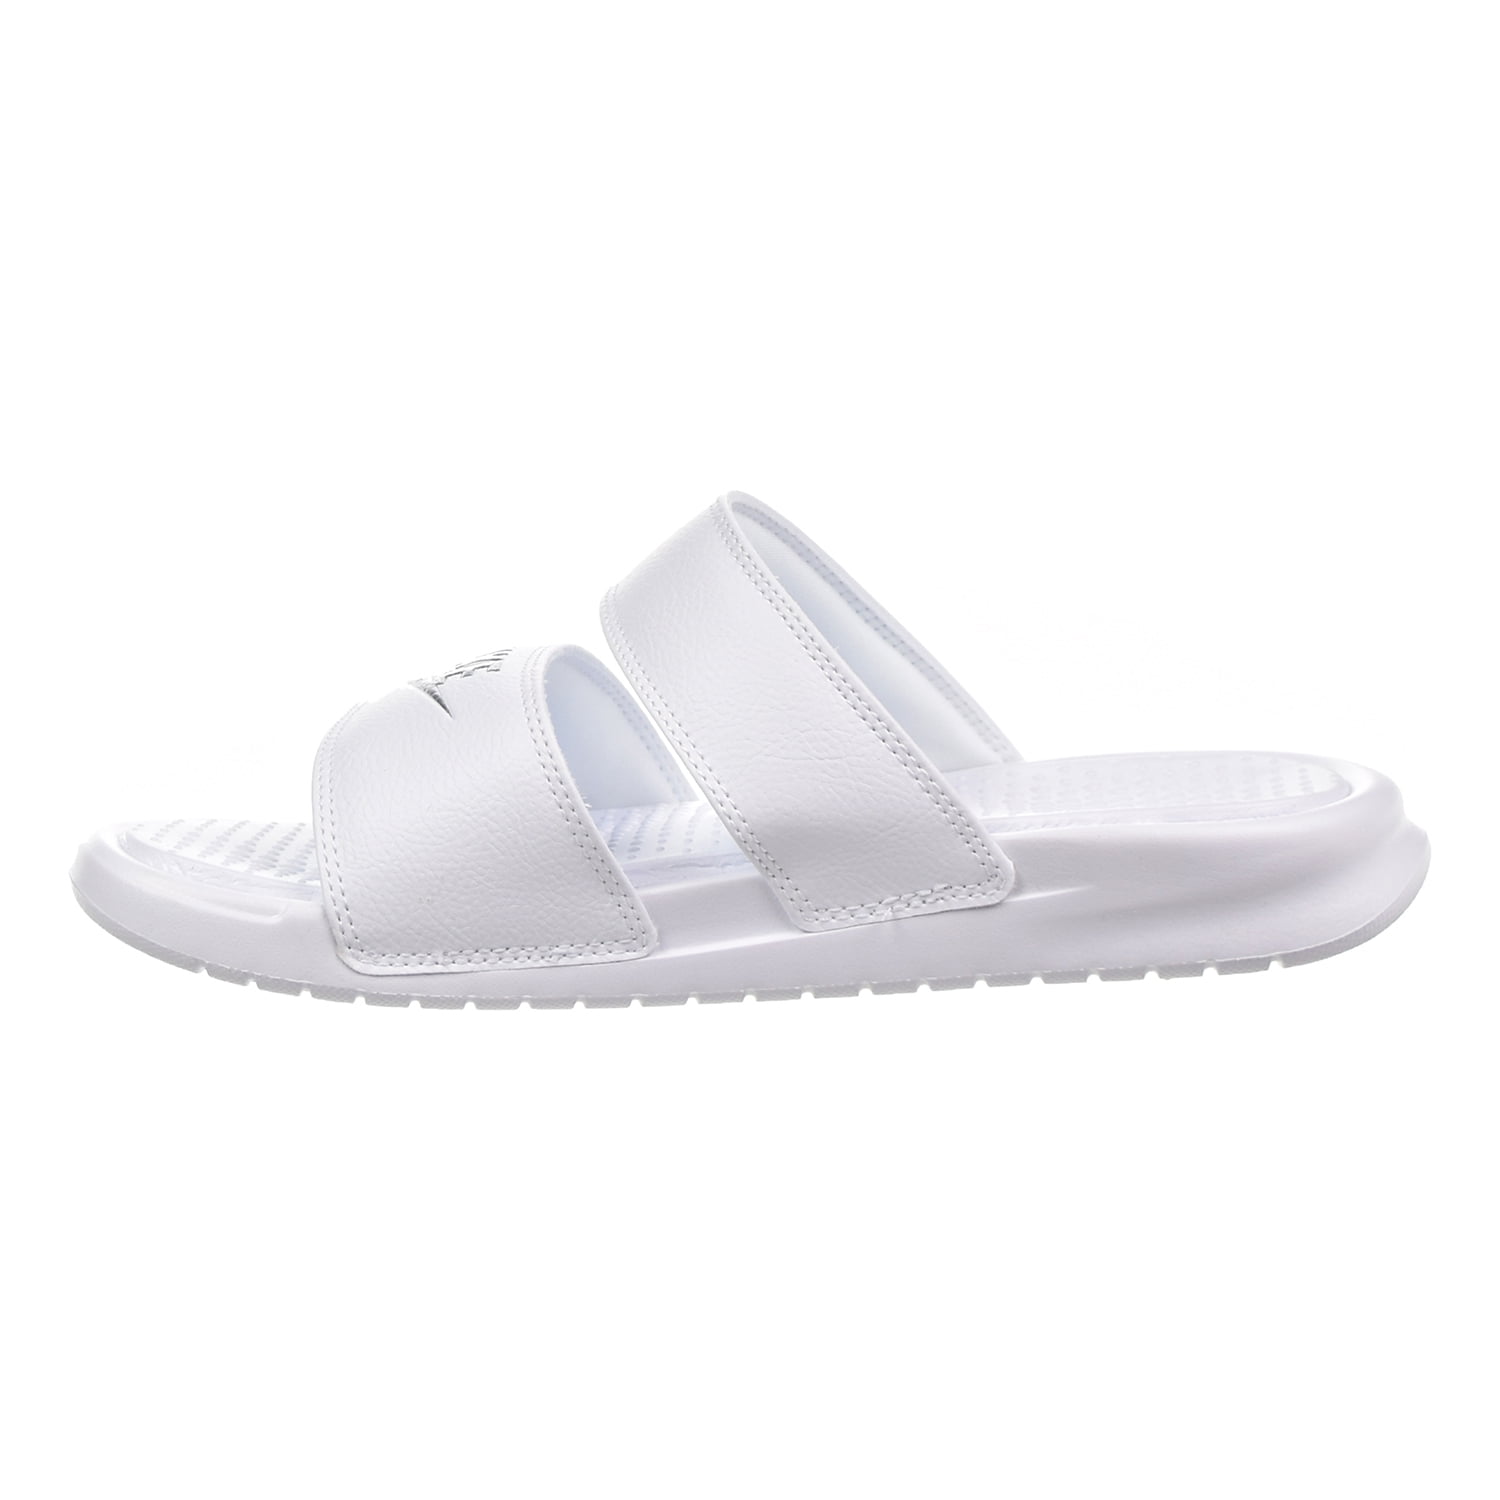 Benassi Ultra Women's Sandals White/Metallic Silver 819717-100 -